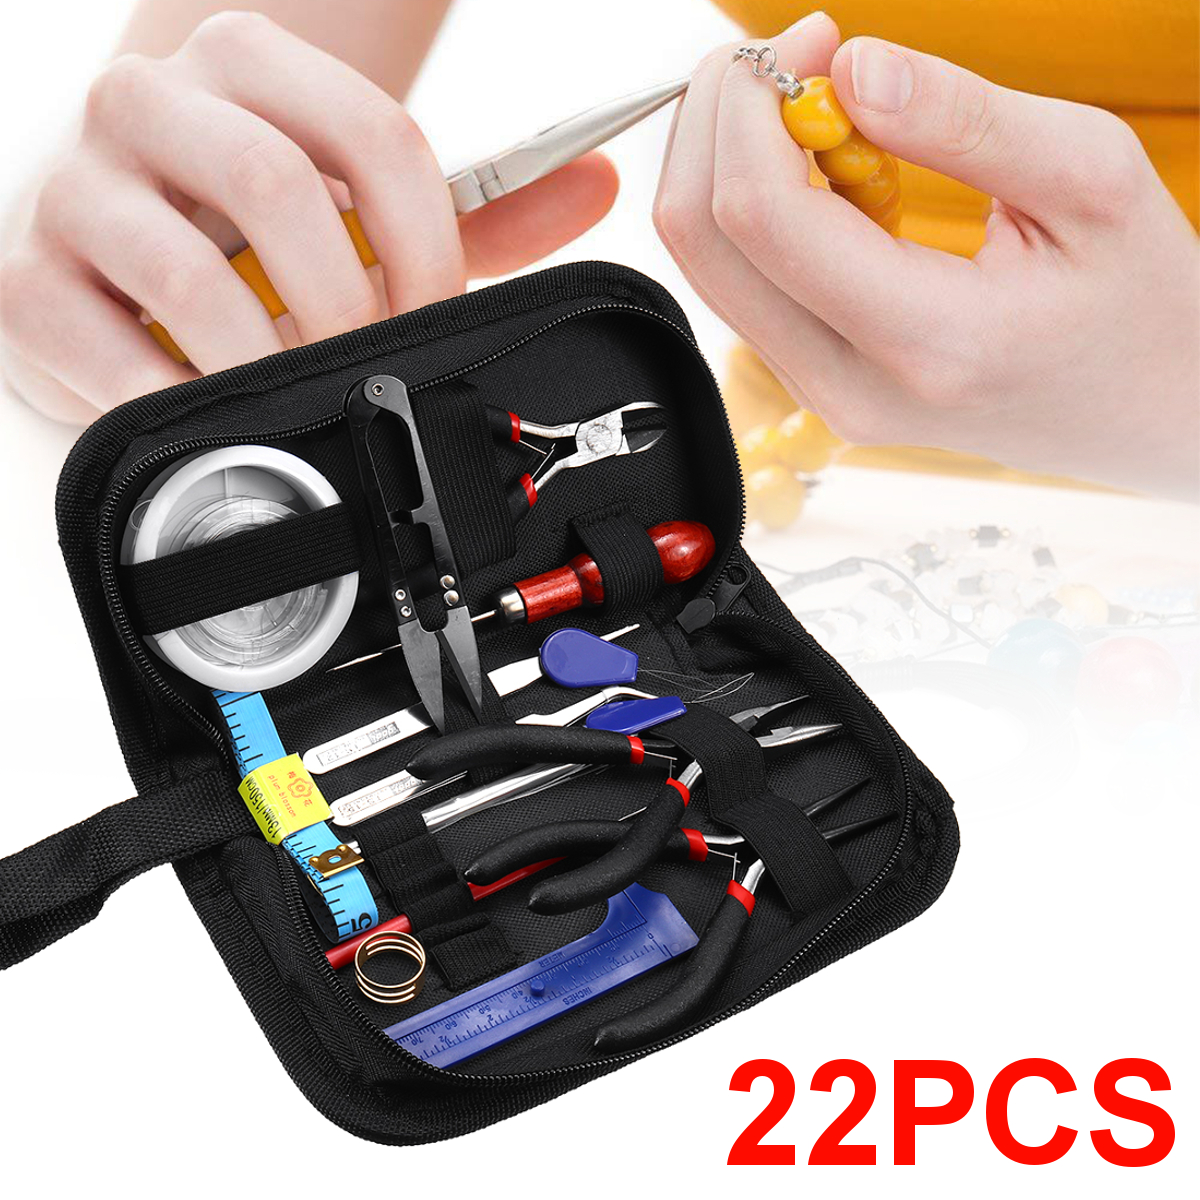 22Pcs-Jewelry-Making-Tools-Repair-Kit-Jewelry-Pliers-Beading-Wire-Set-DIY-Craft-1713659-1